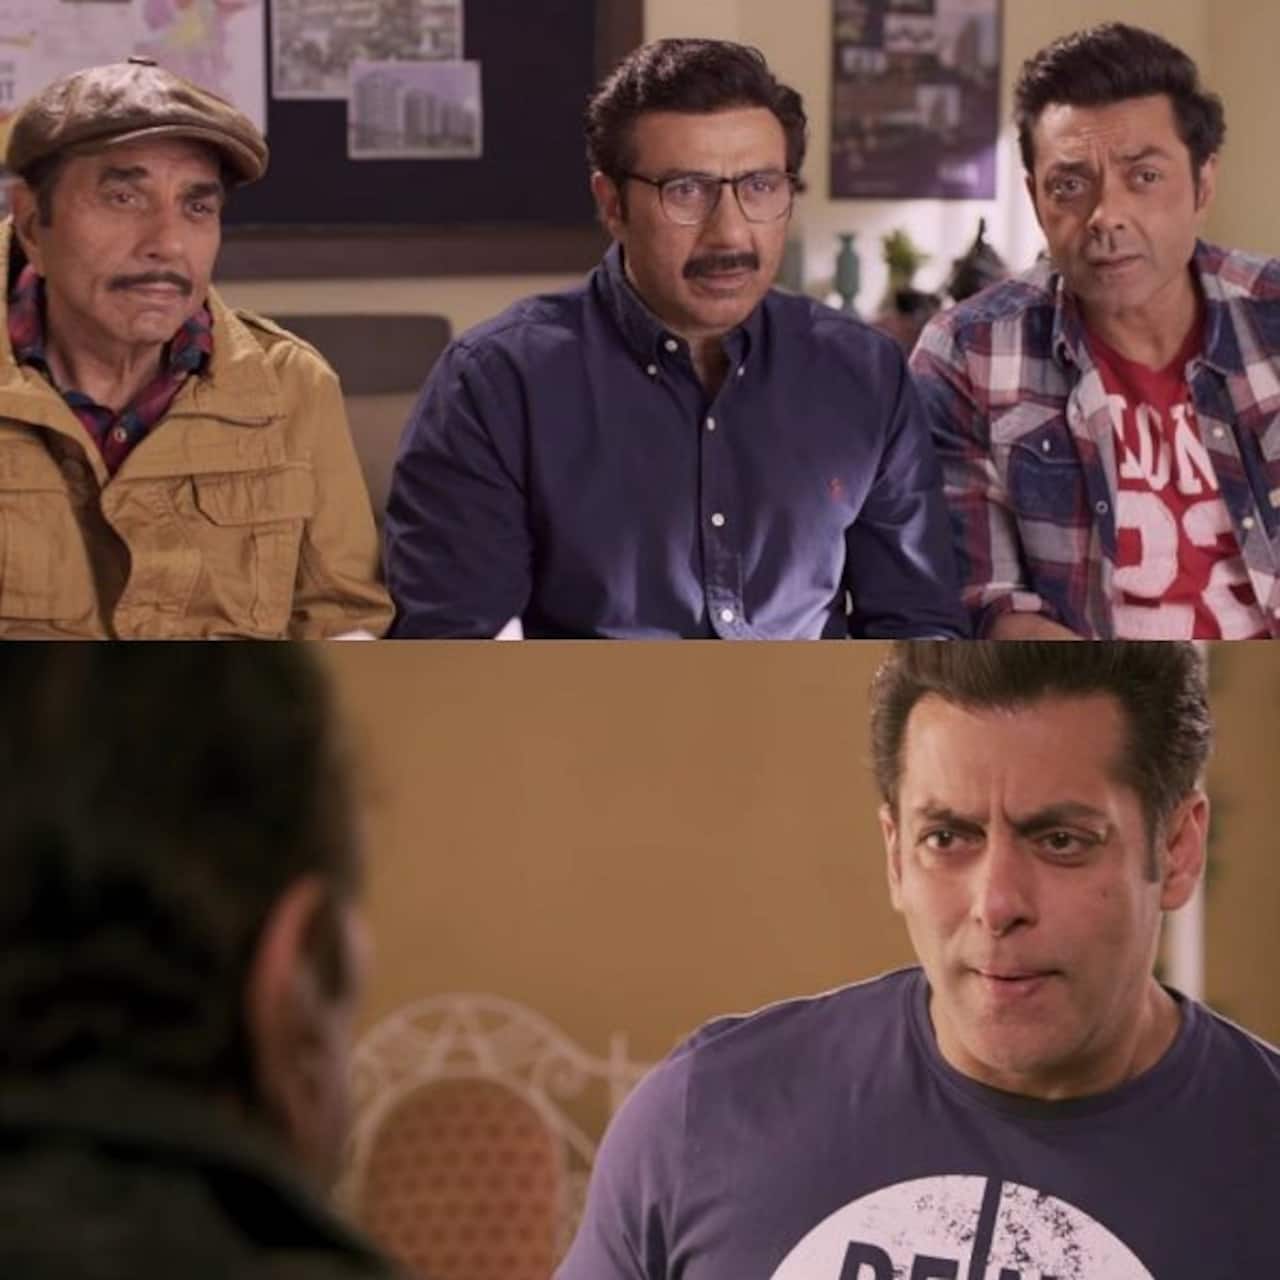 Yamla Pagla Deewana Phir Se: Salman Khan joins the Dharmendra, Sunny Deol and Bobby Deol's comedy as Mastana - watch video